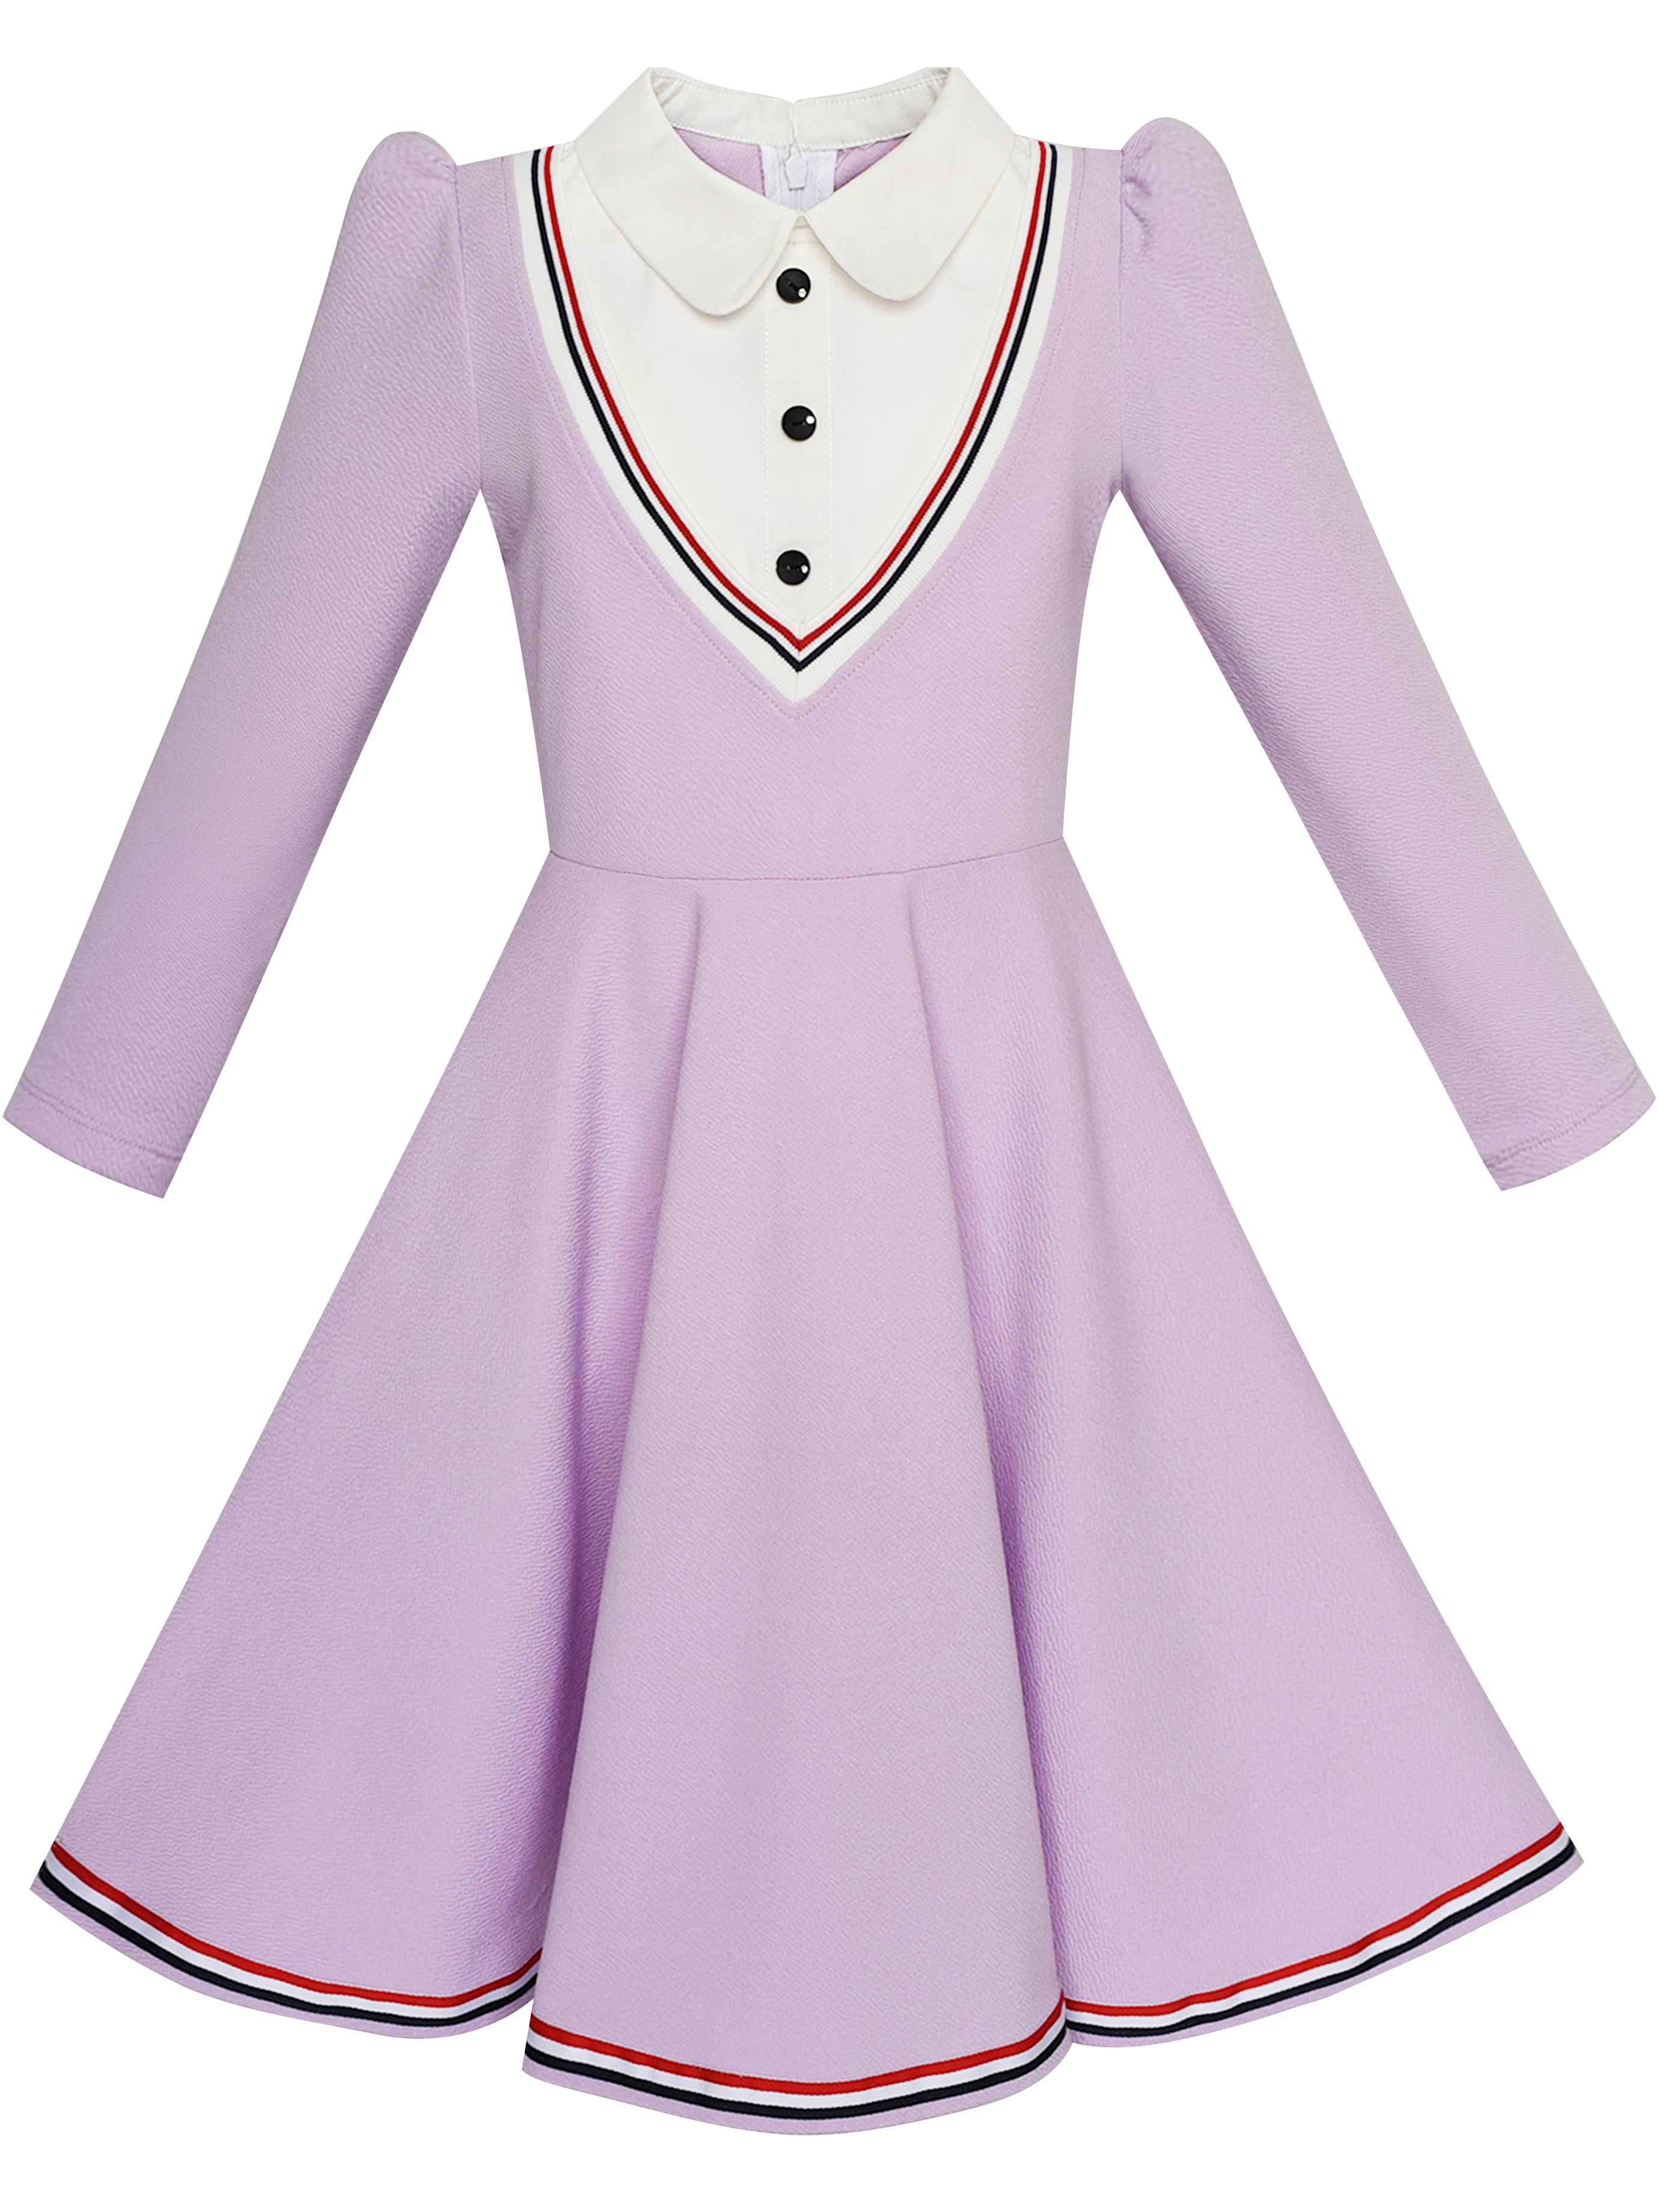 Girls Dress School Uniform White Collar Purple Long Sleeve Striped 5 ...